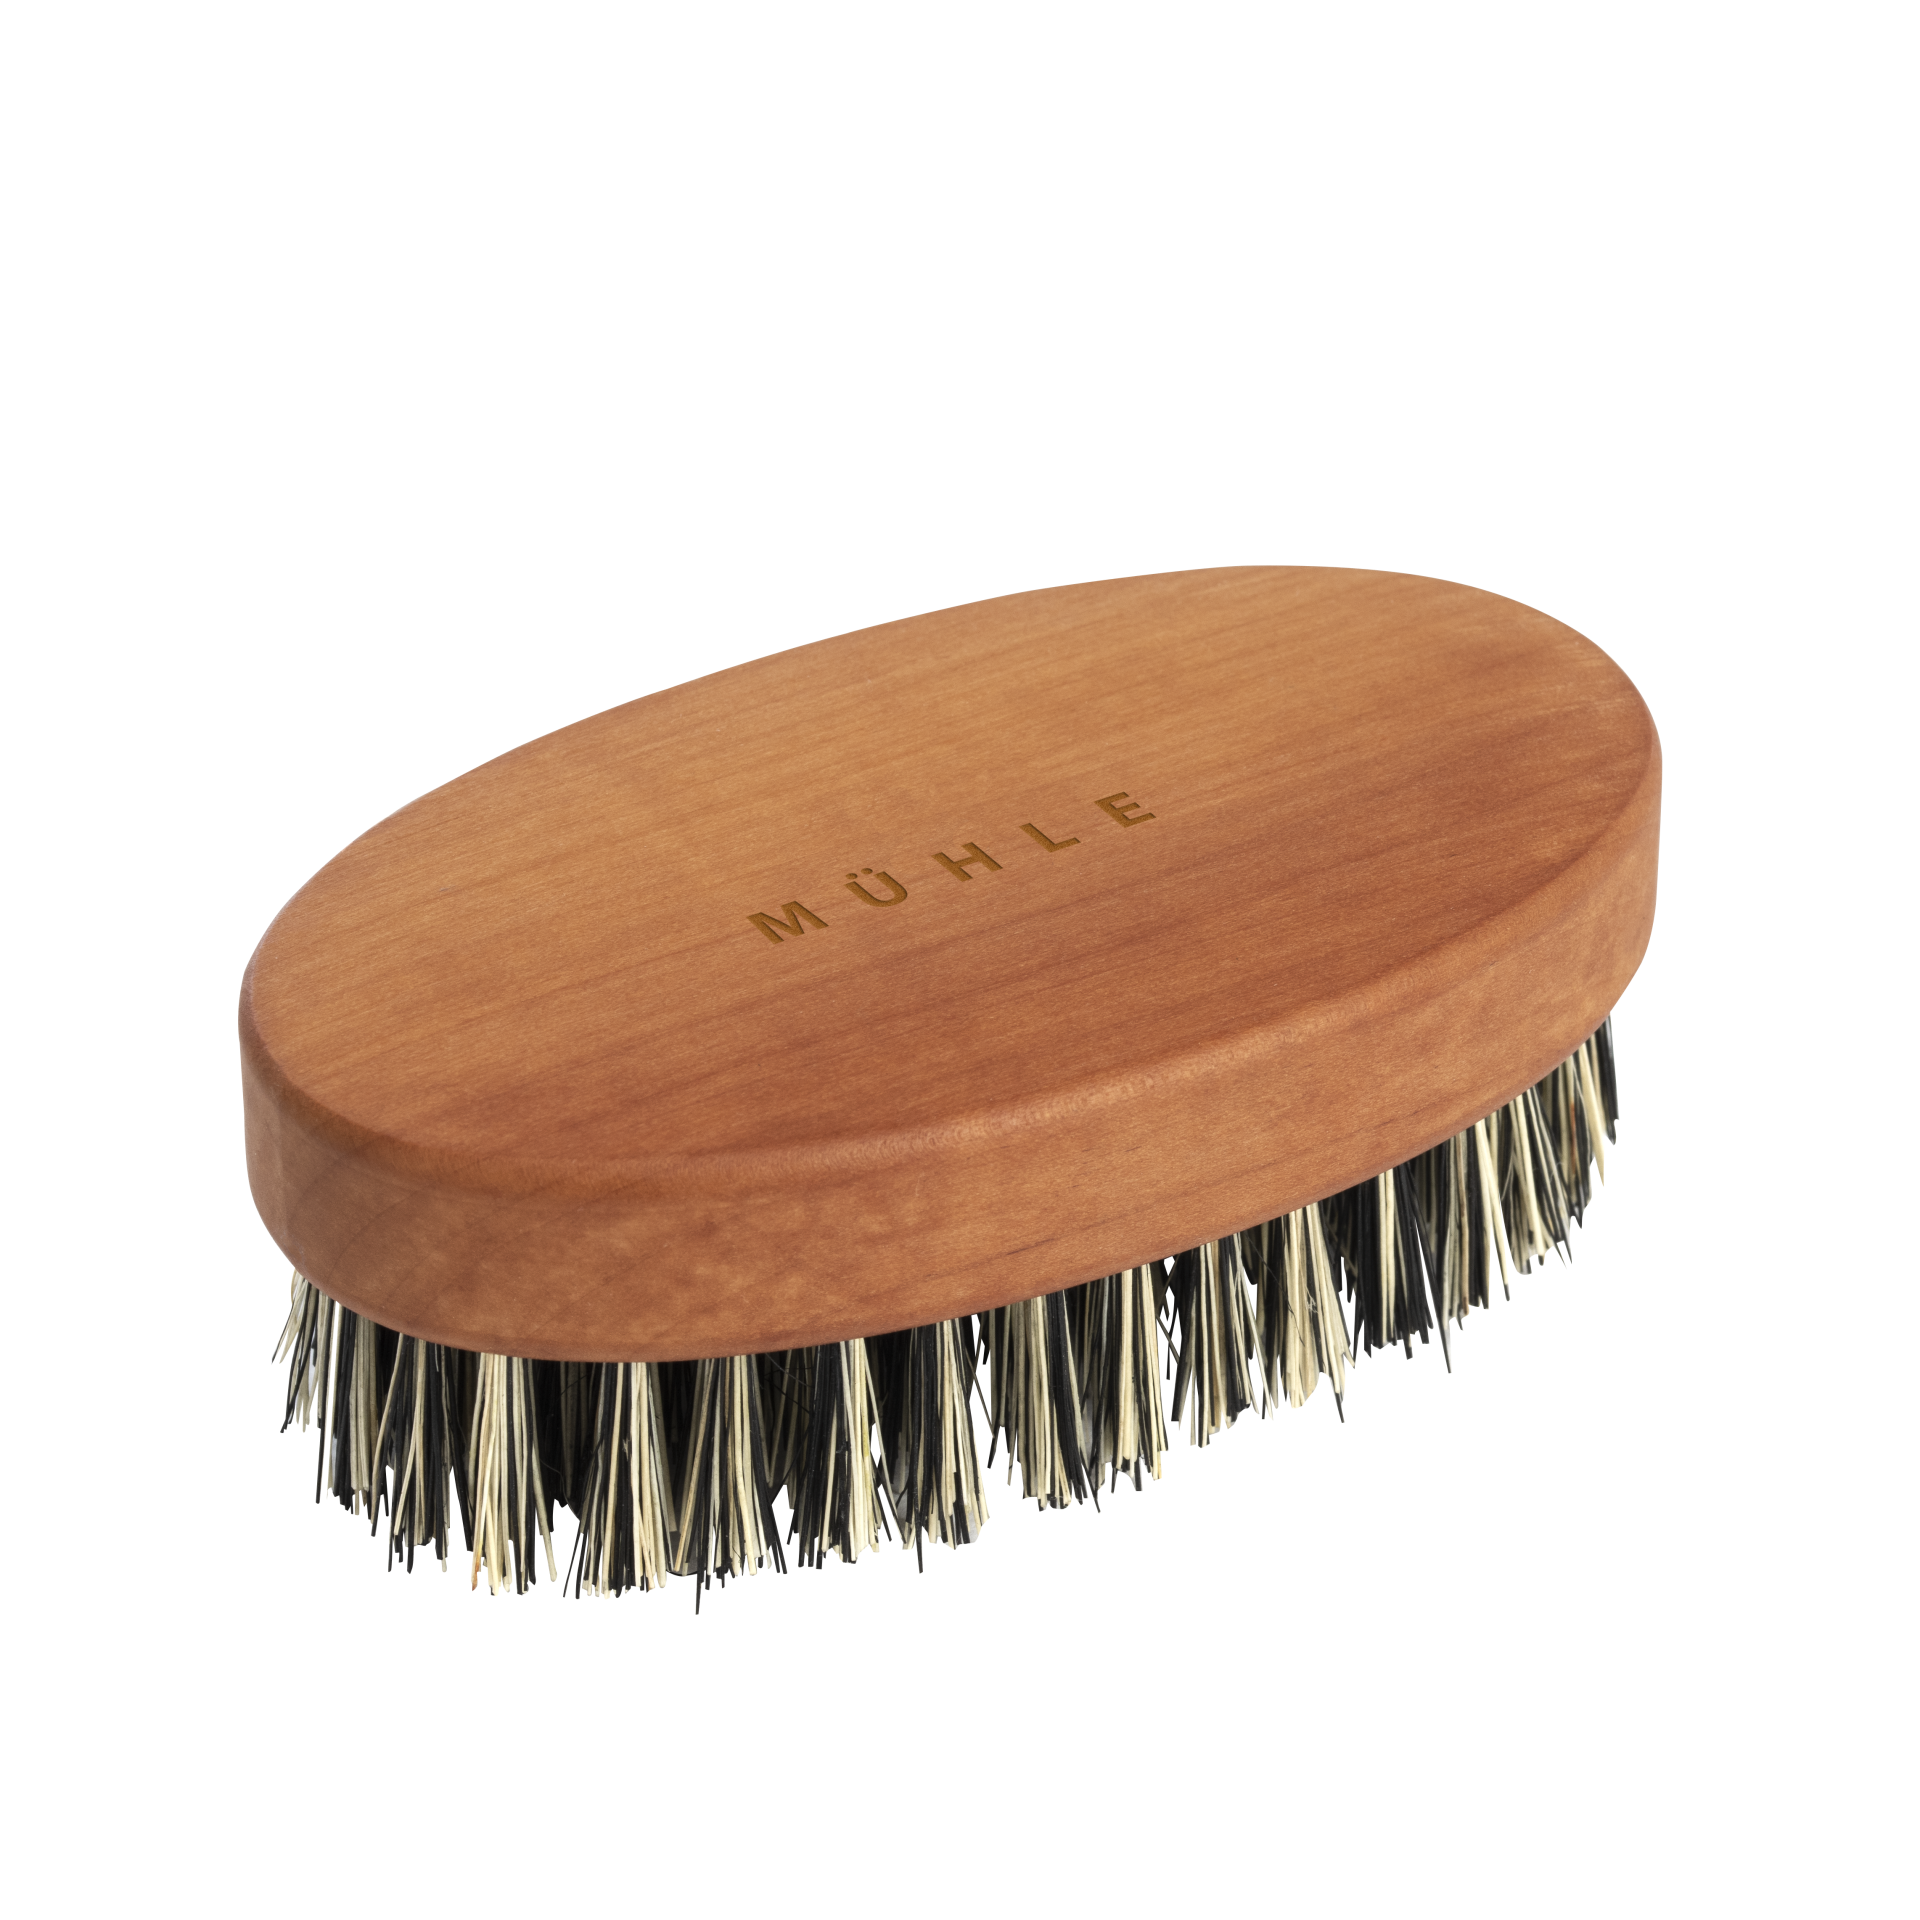 BEARDCARE - Beard Brush